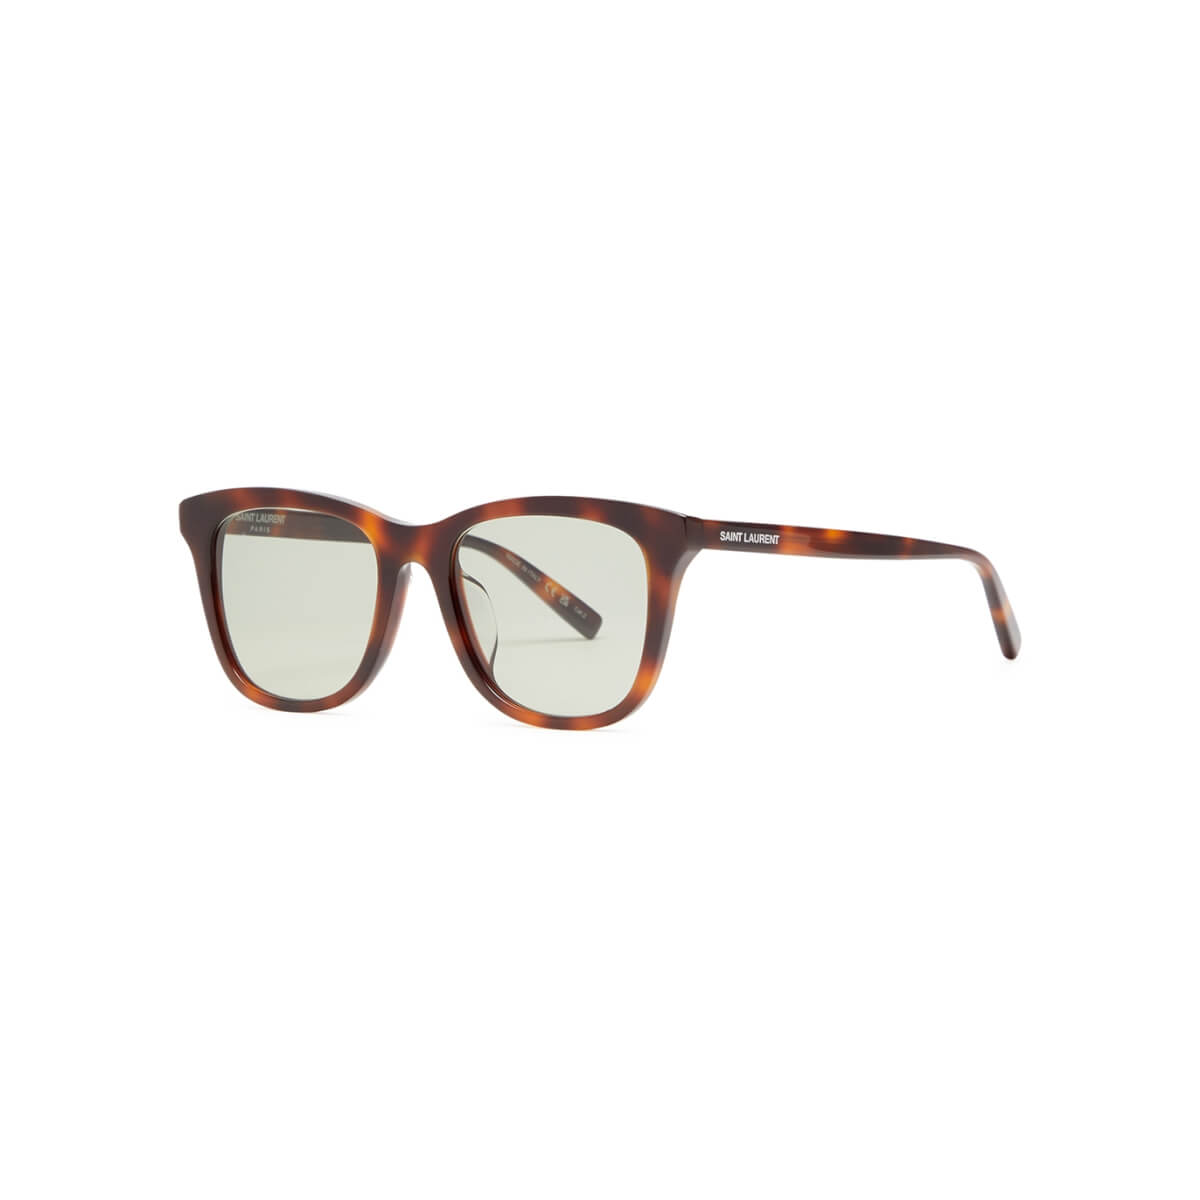 Saint Laurent Wayfarer Sunglasses - Brown